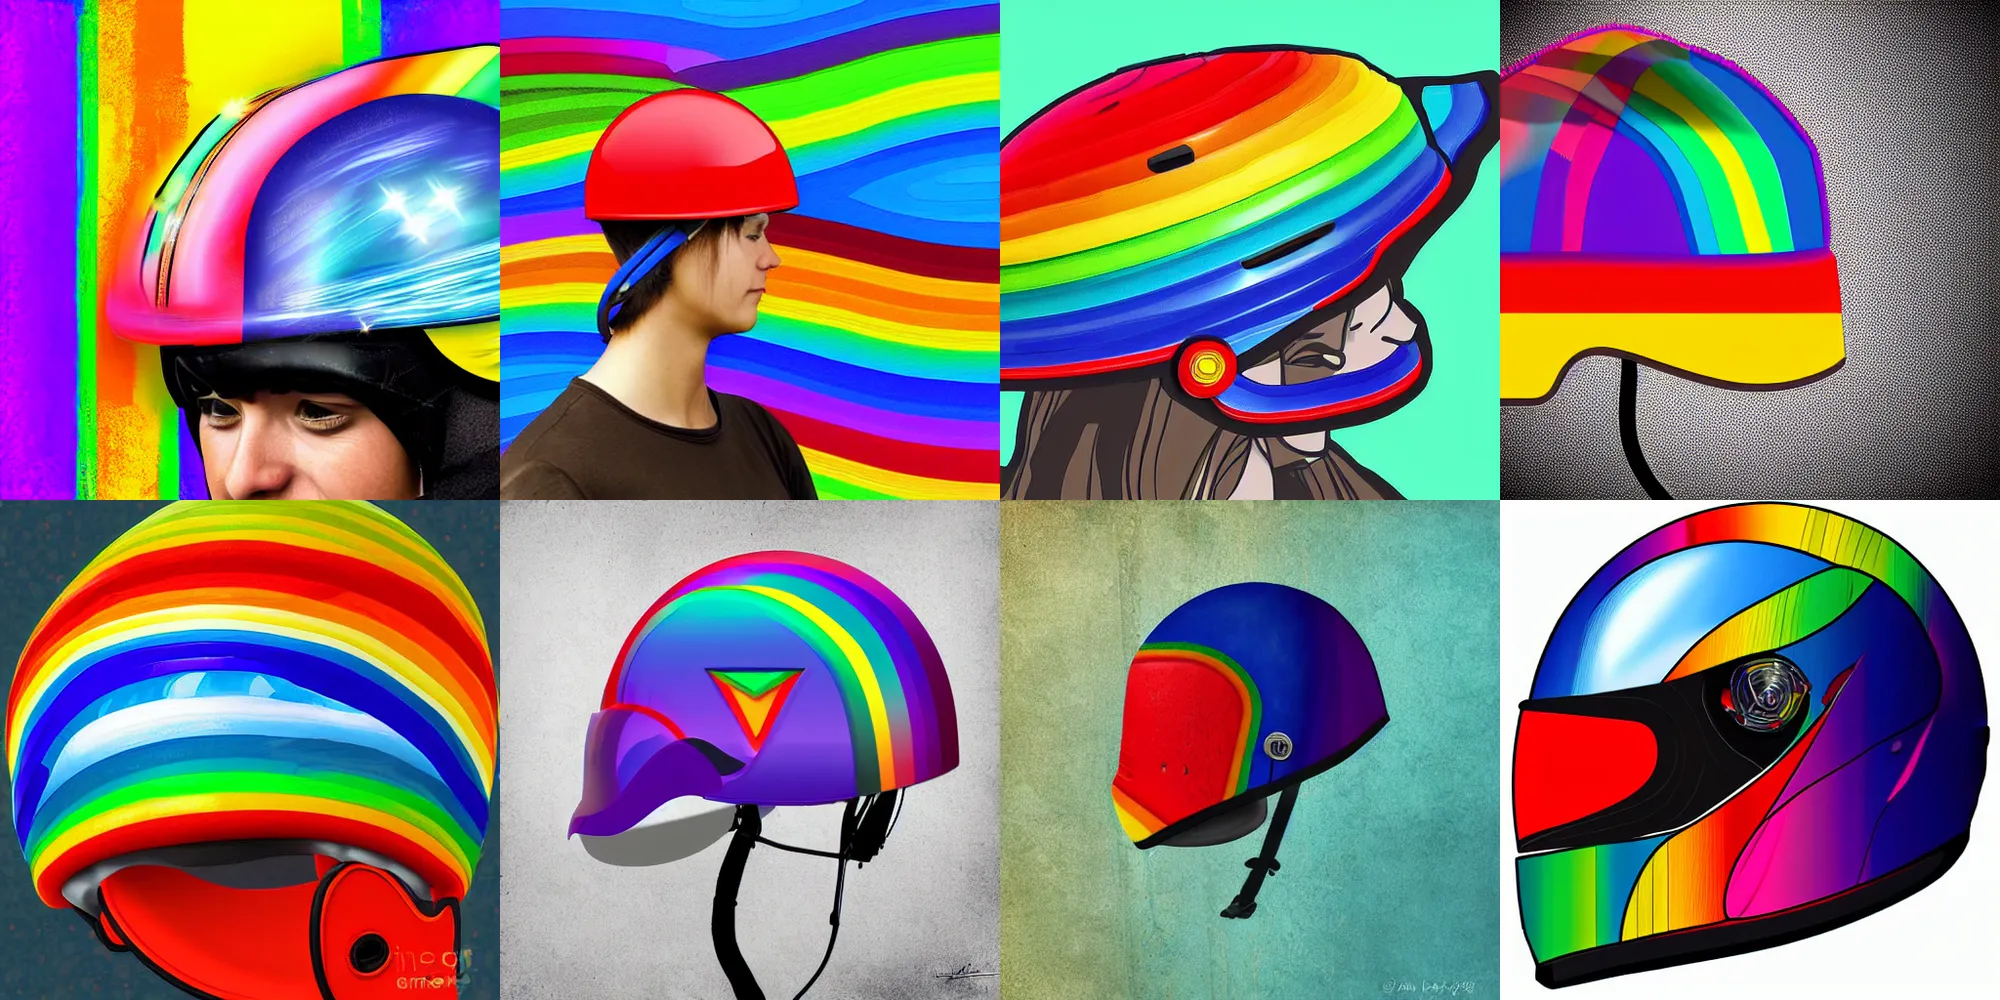 Prompt: rainbow steamboat helmet with flip up visor, digital art